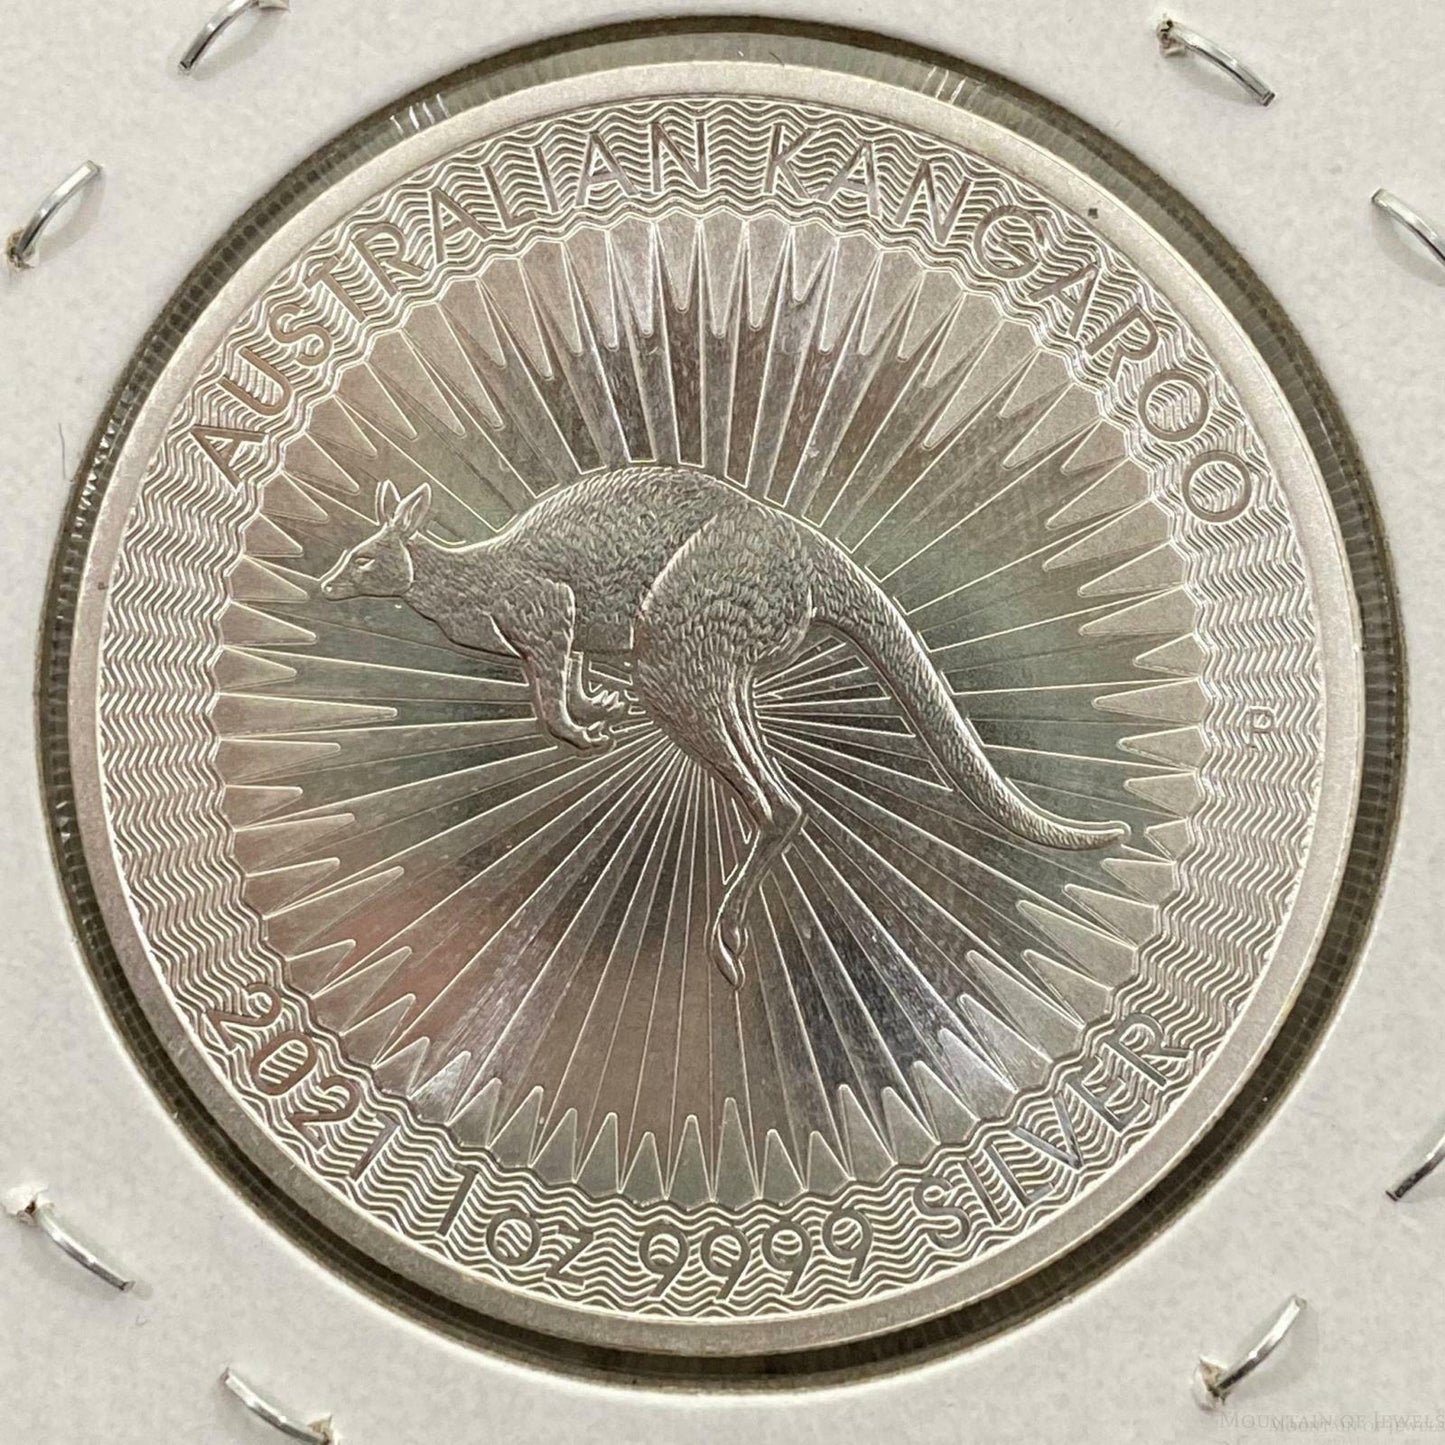 2021 1.0 Ounce .9999 Fine Silver Australian Kangaroo BU #11222-3